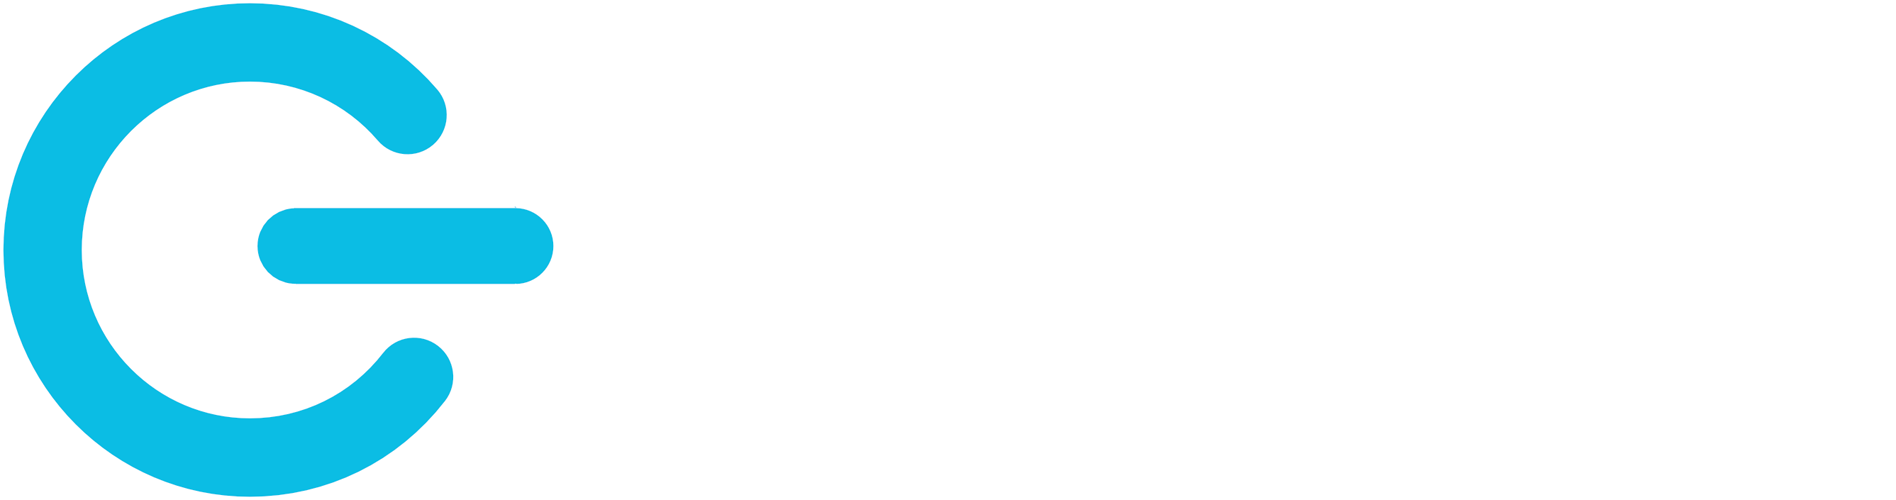 GI logo